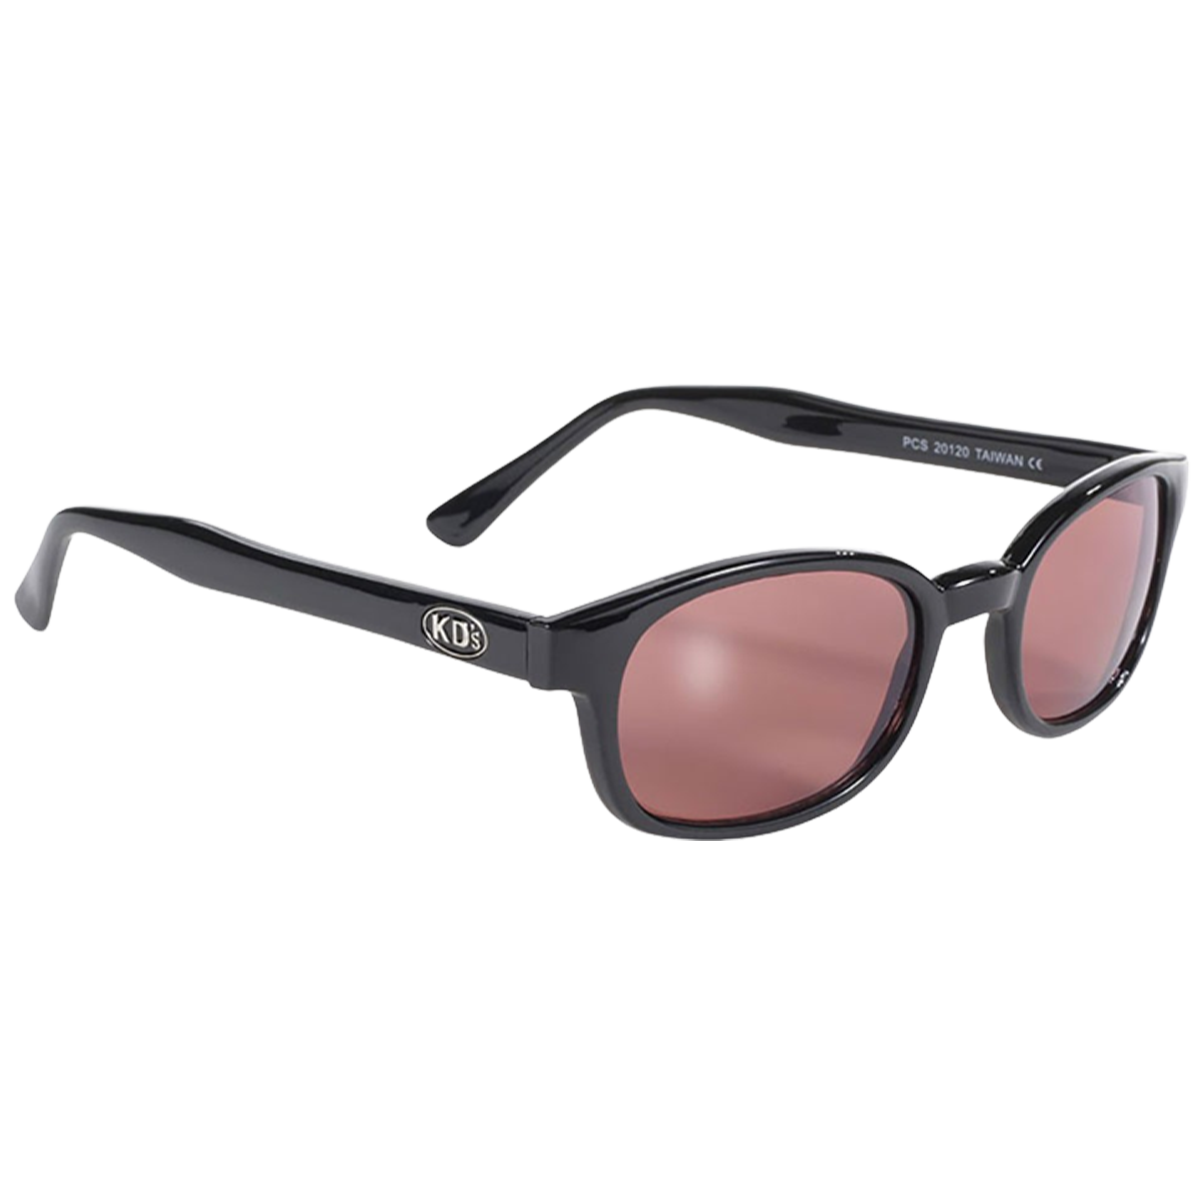 Sunglasses KD's 20120 classic - Pink lenses